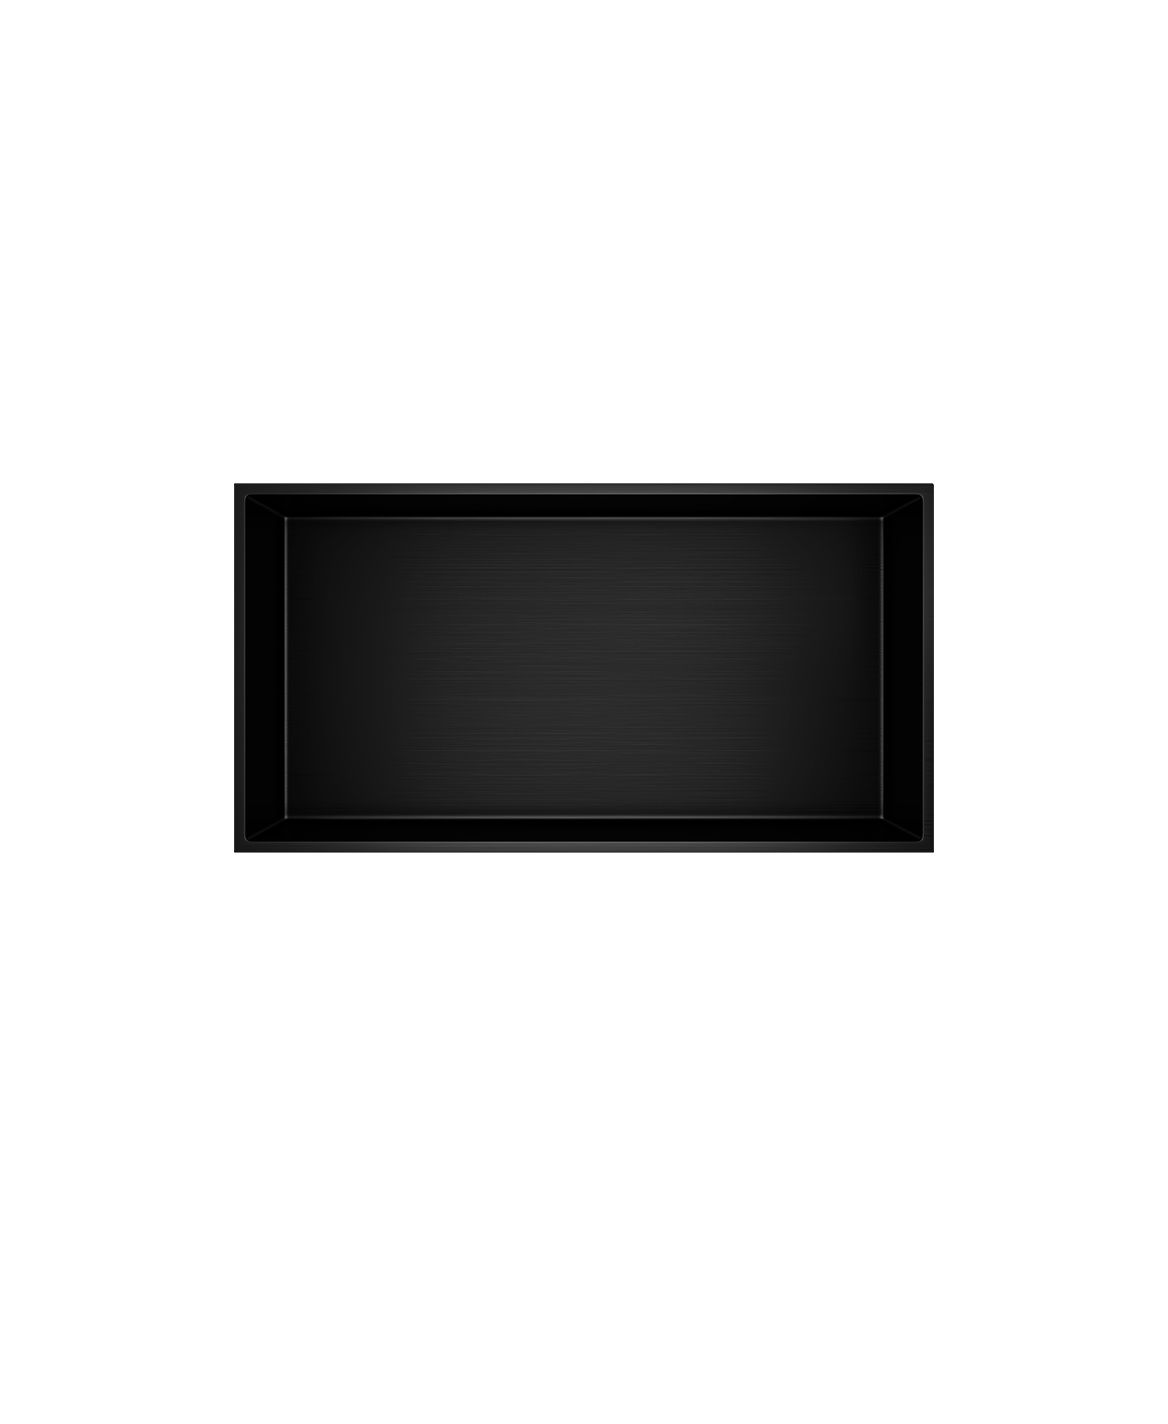 Wandnische Edelstahl schwarz matt rostfrei 300x600x100mm - Schwarz Matt - Aloni